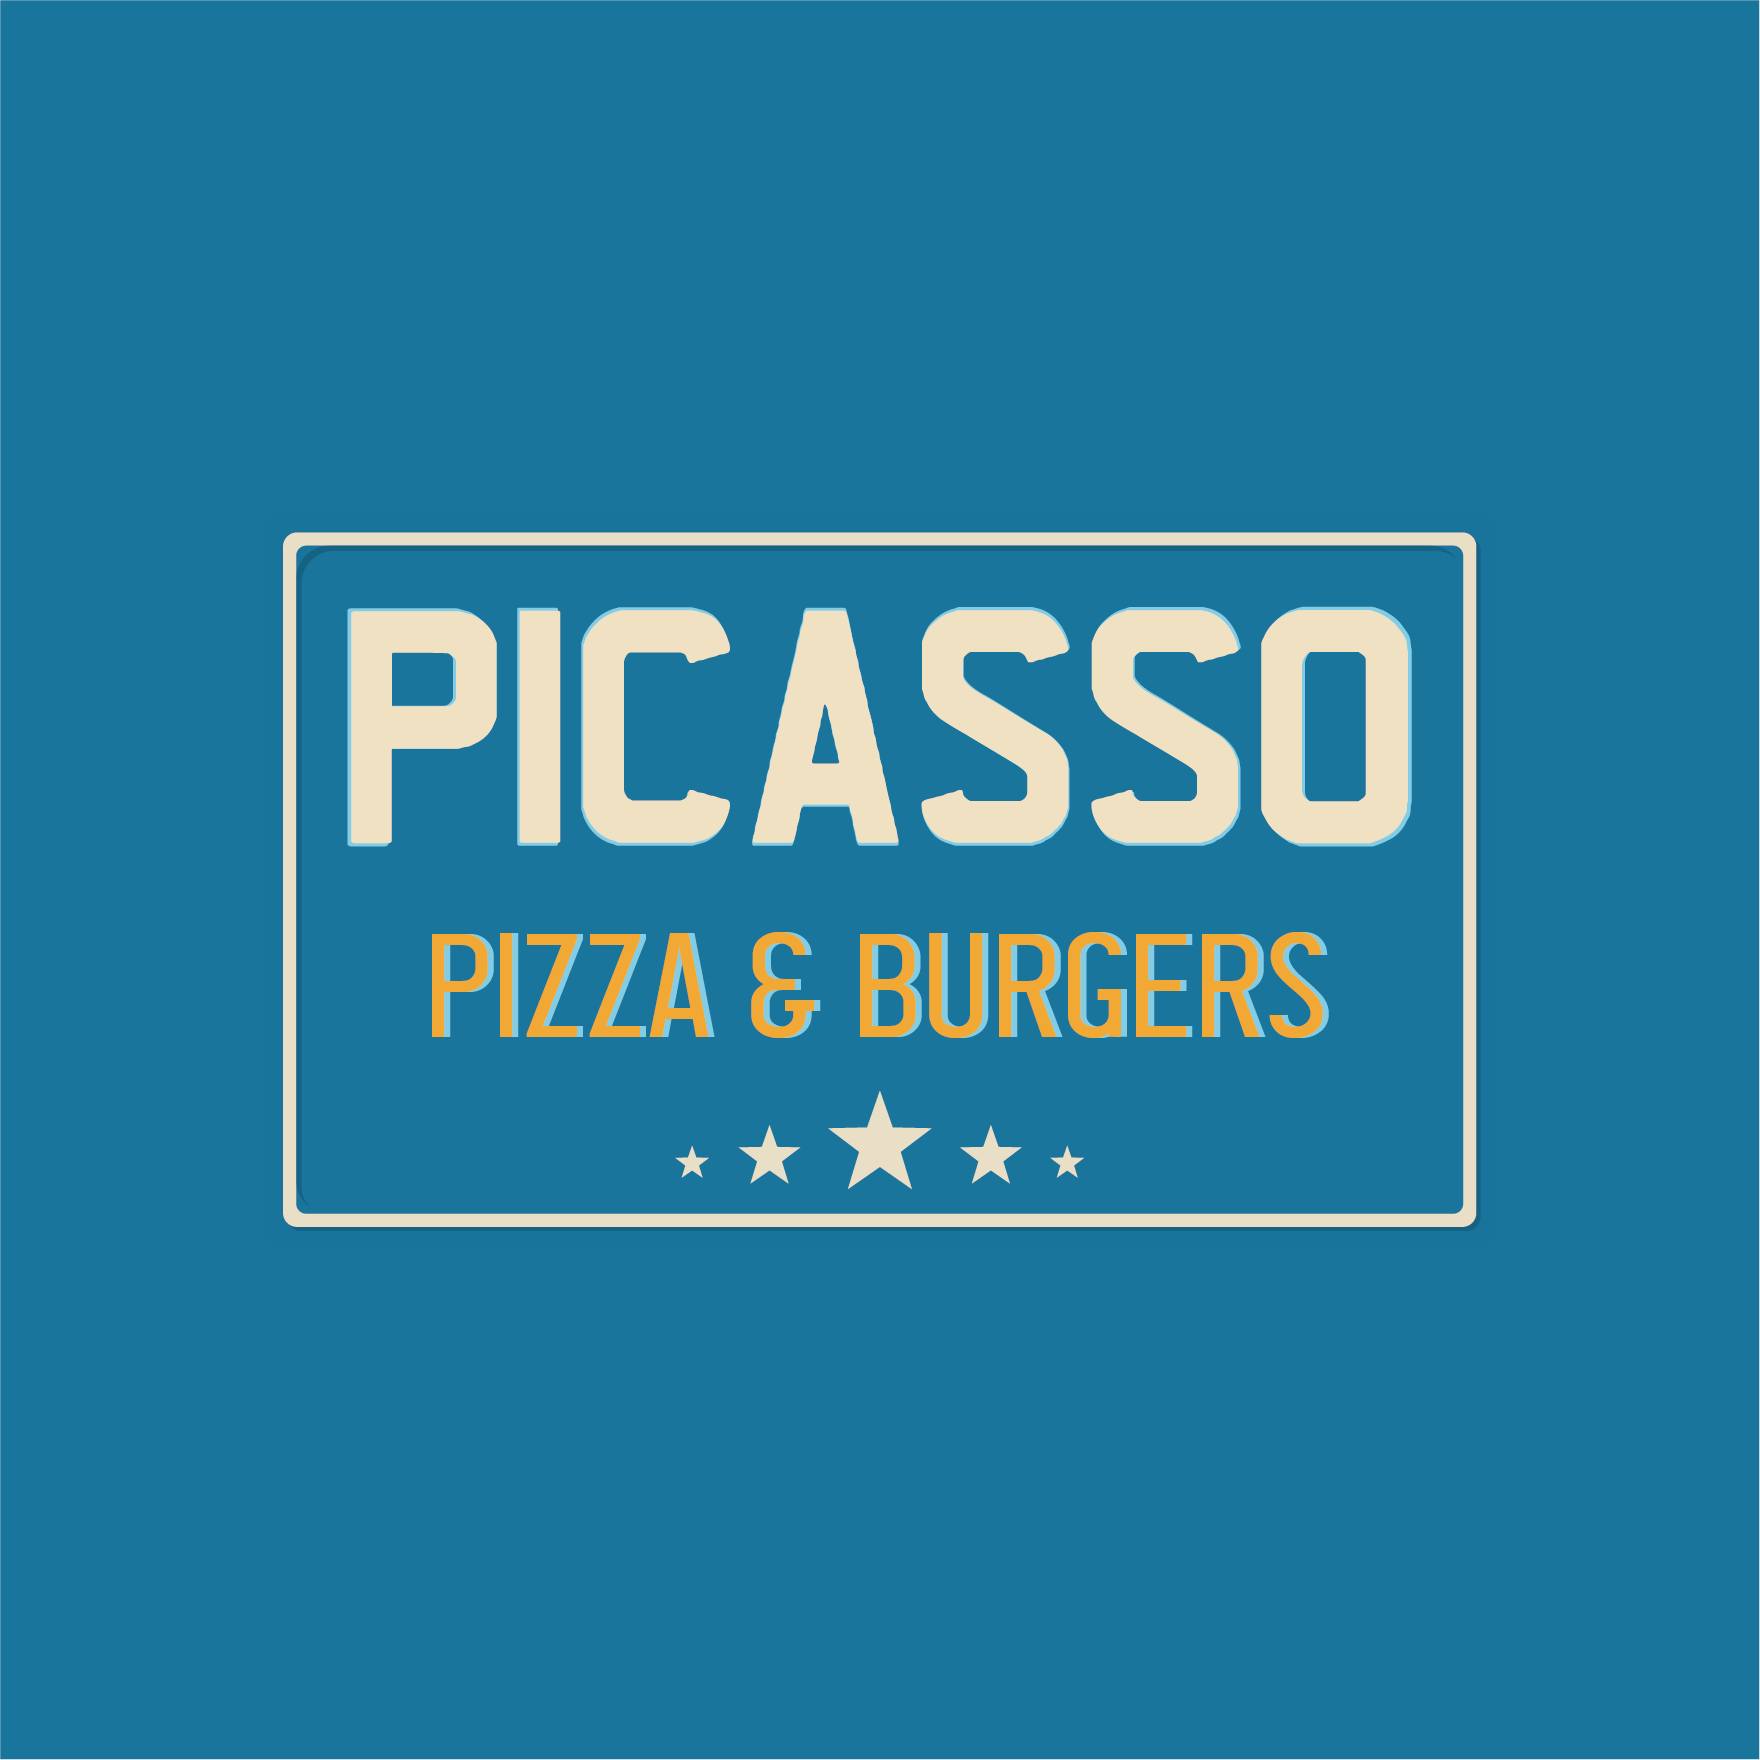 Picasso pizza & burgers logo